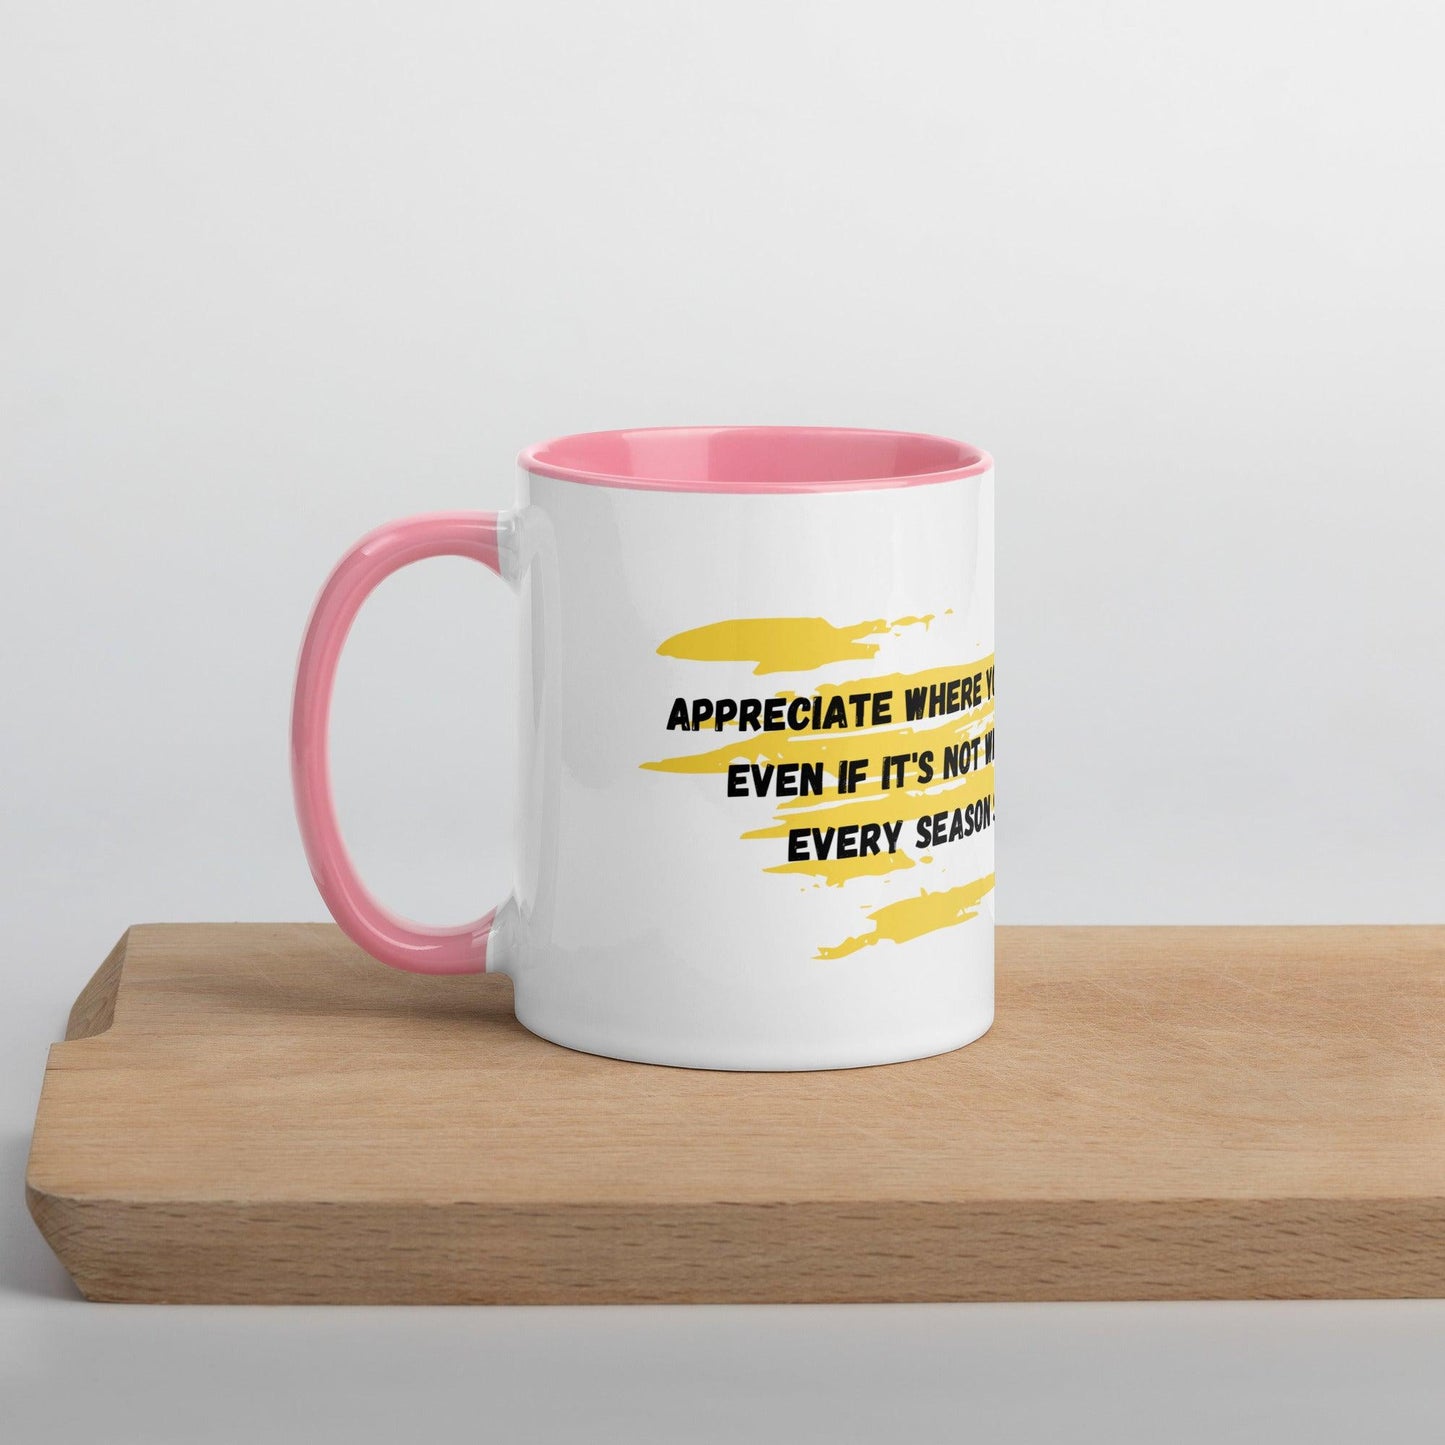 Appreciate where you are coffee mug